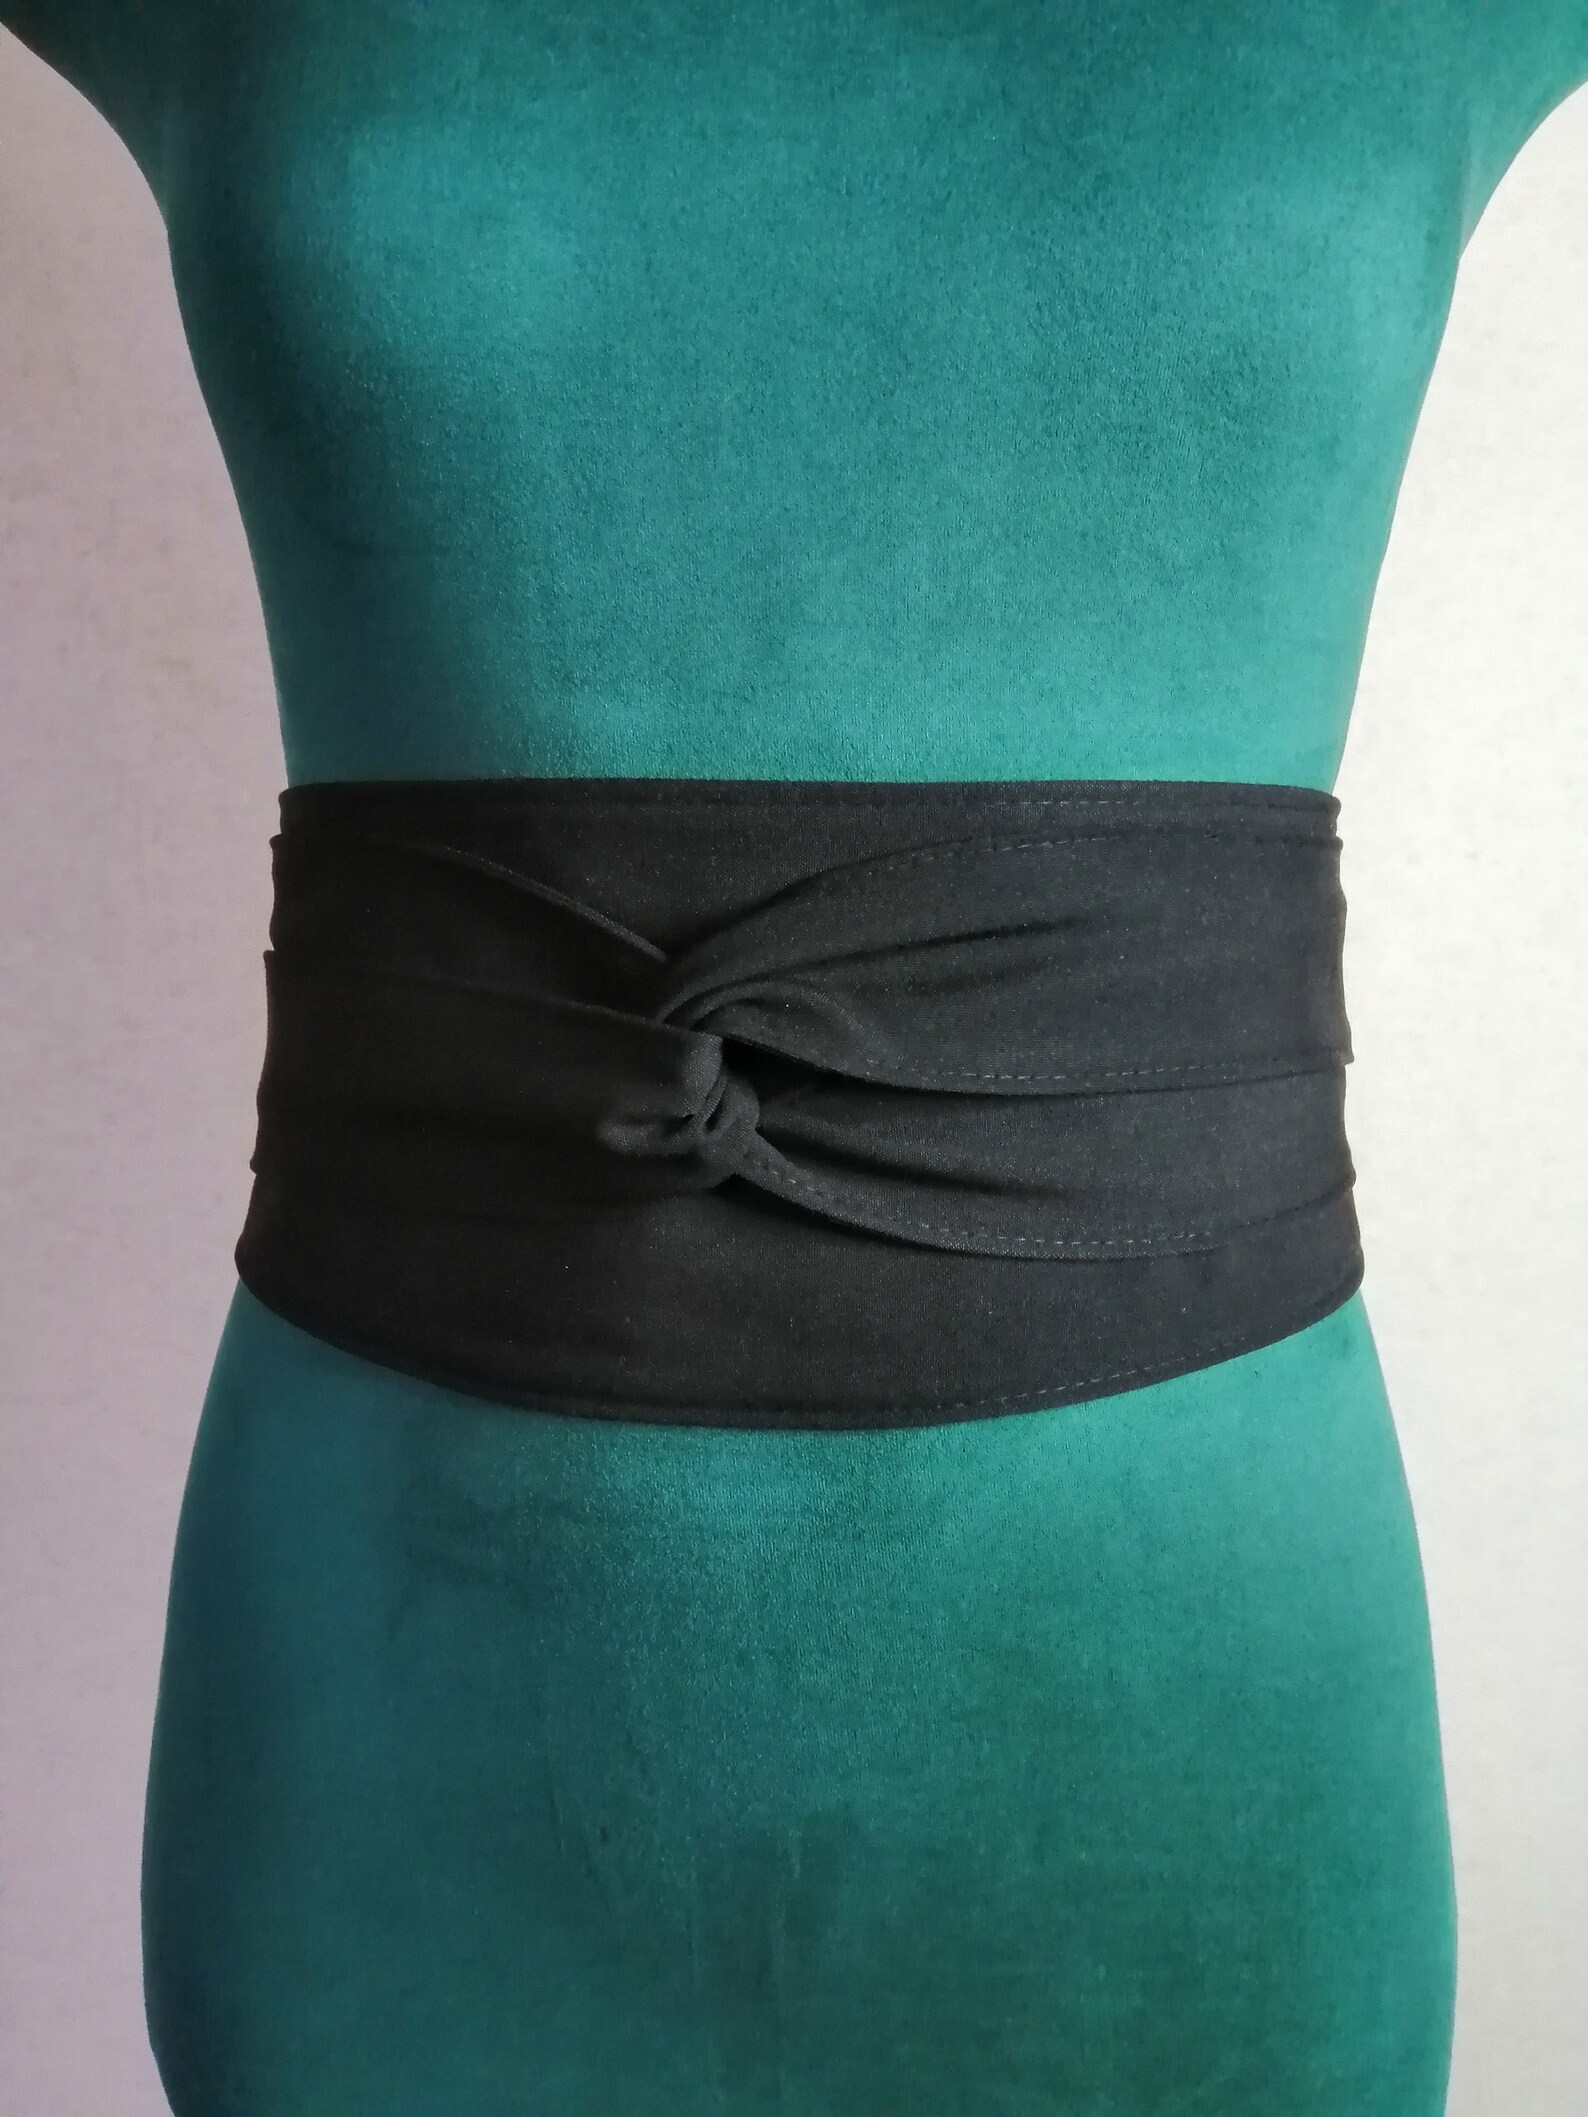 Black cloth sash casual women's Obi belt wide 033 | Etsy